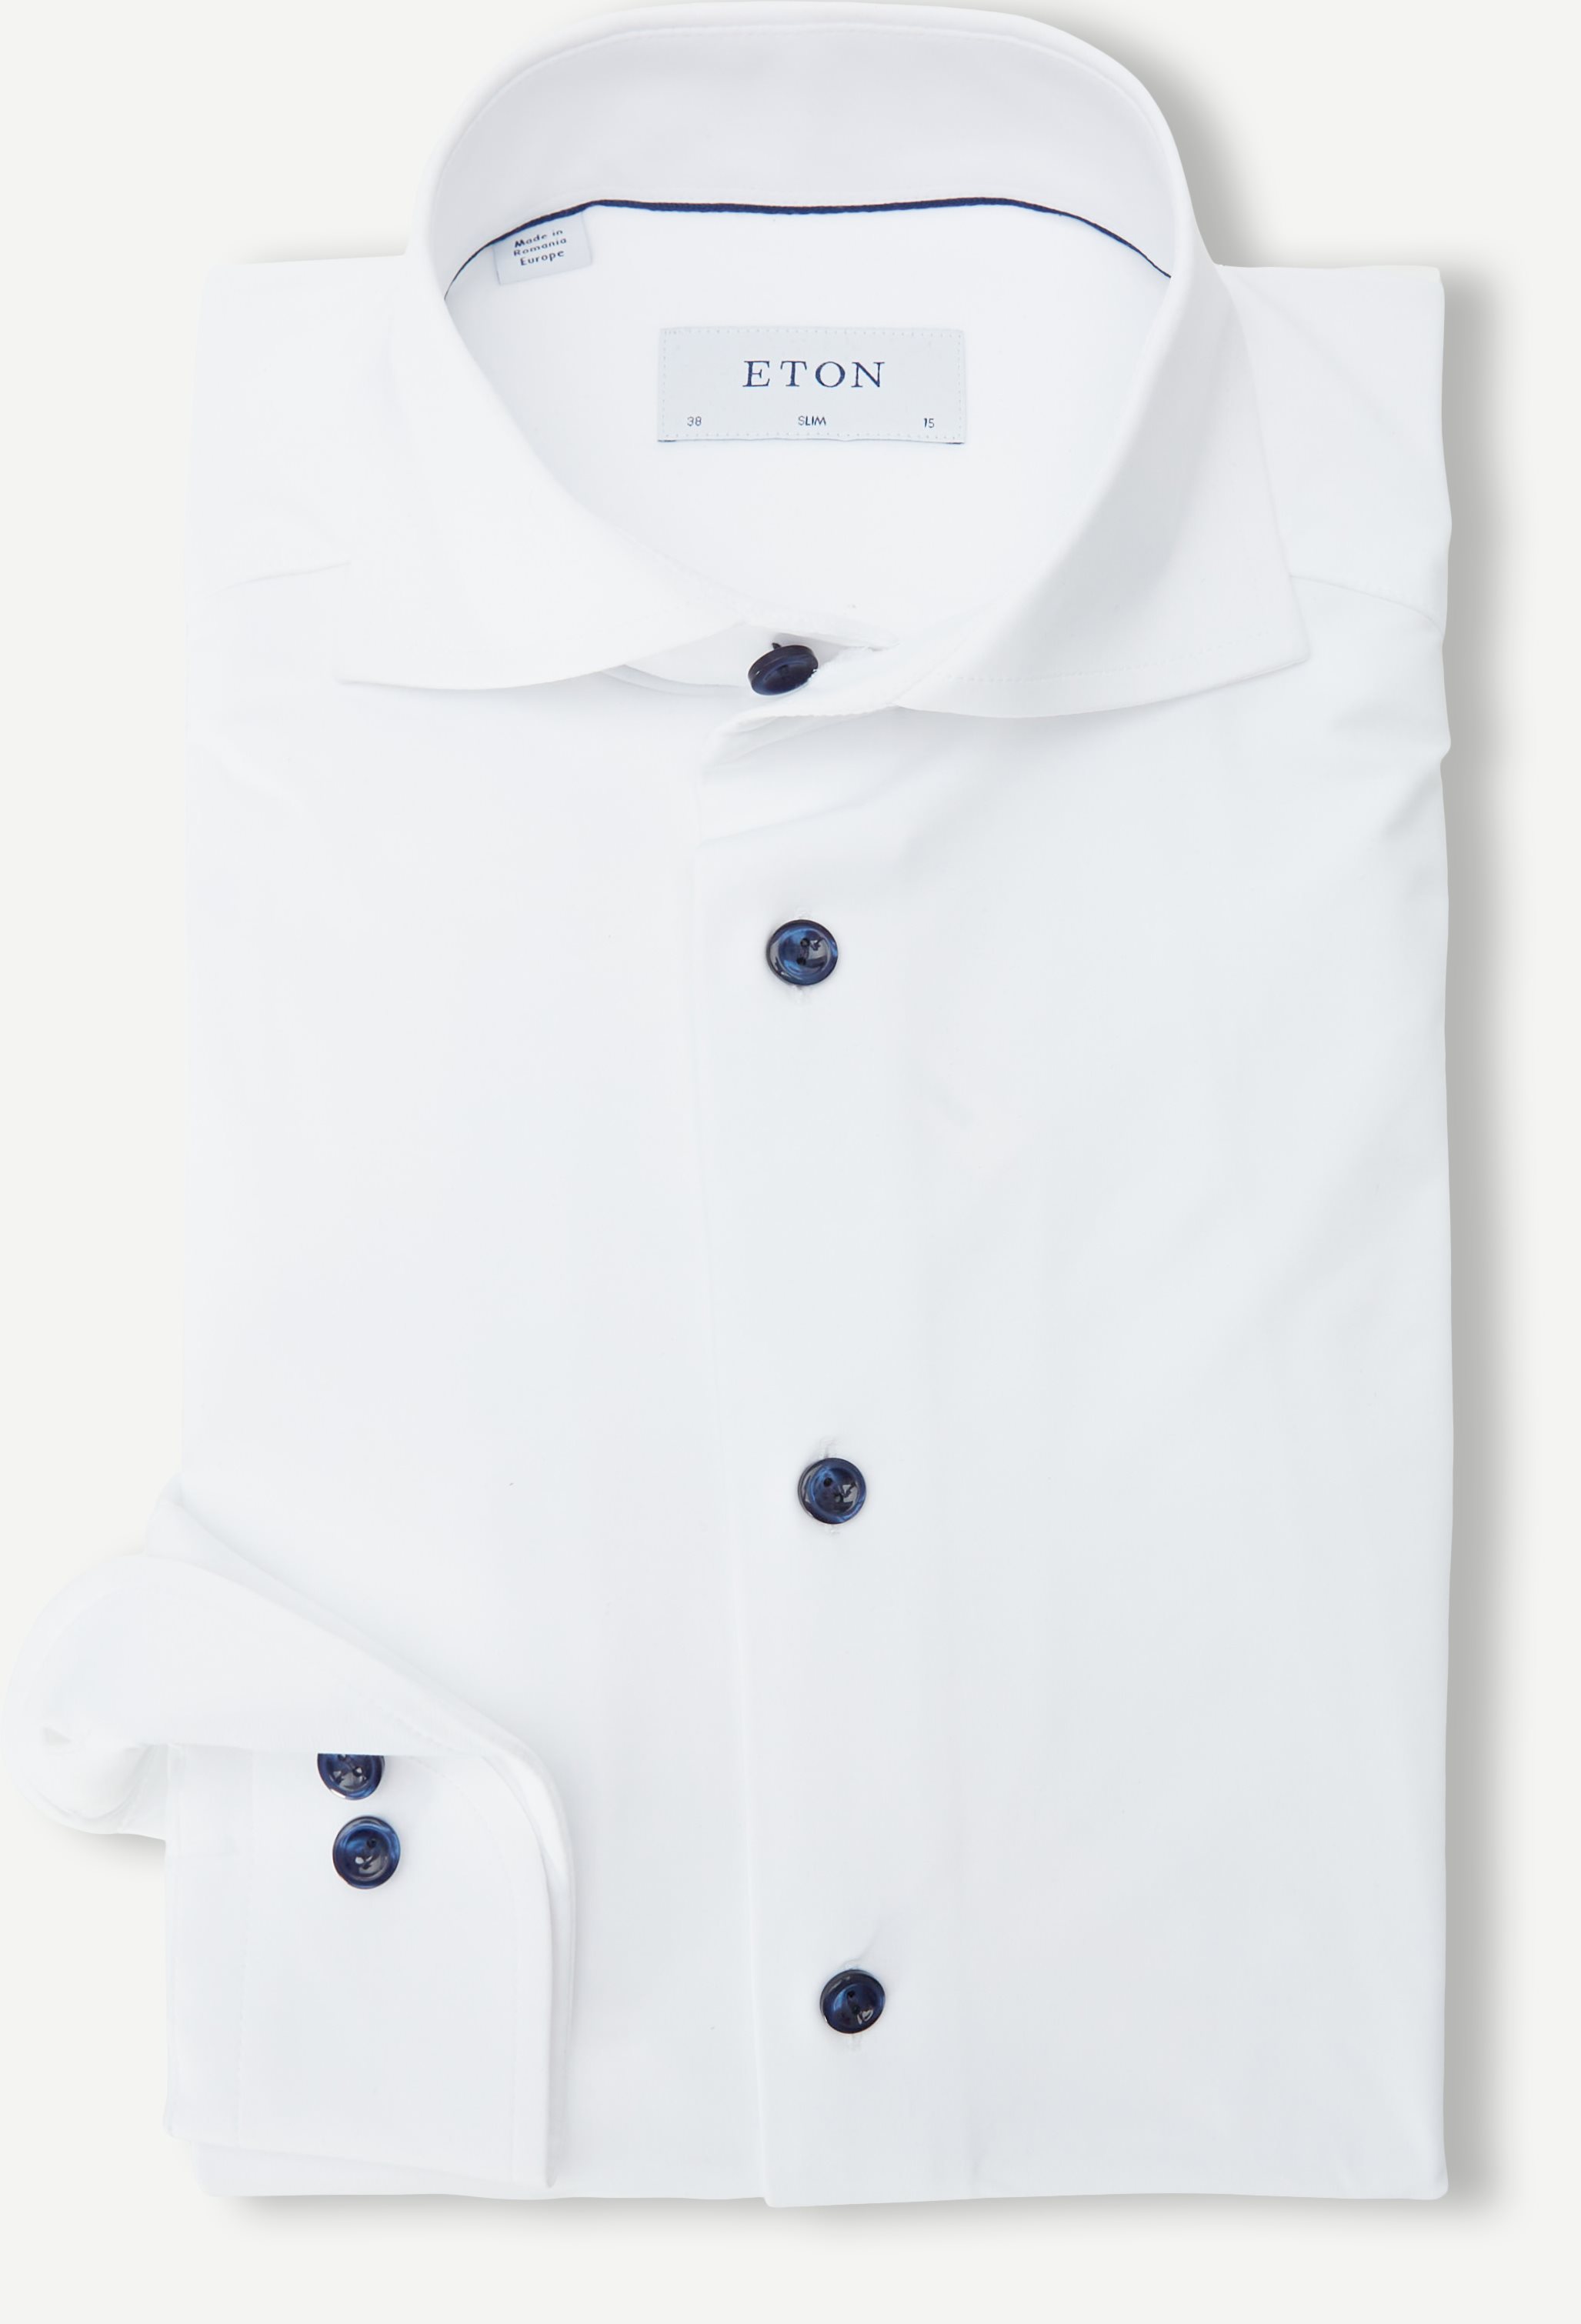 Eton Shirts 8005 84 00/28  White